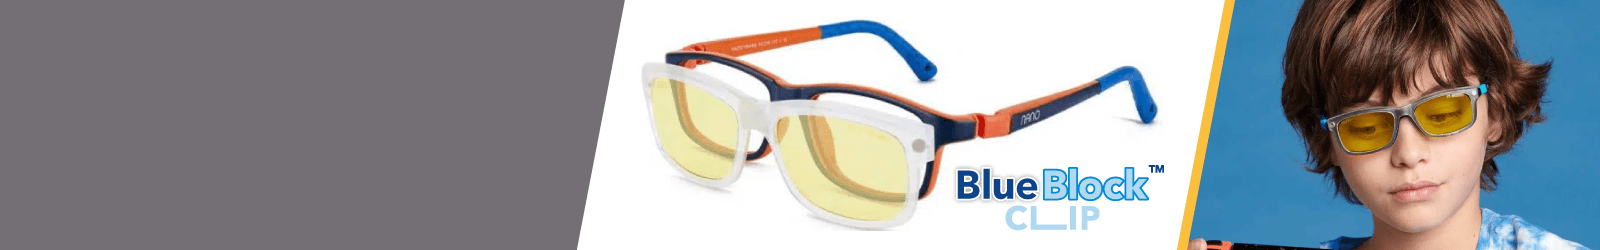 Nano Blue Block Clip Eyeglass Lenses